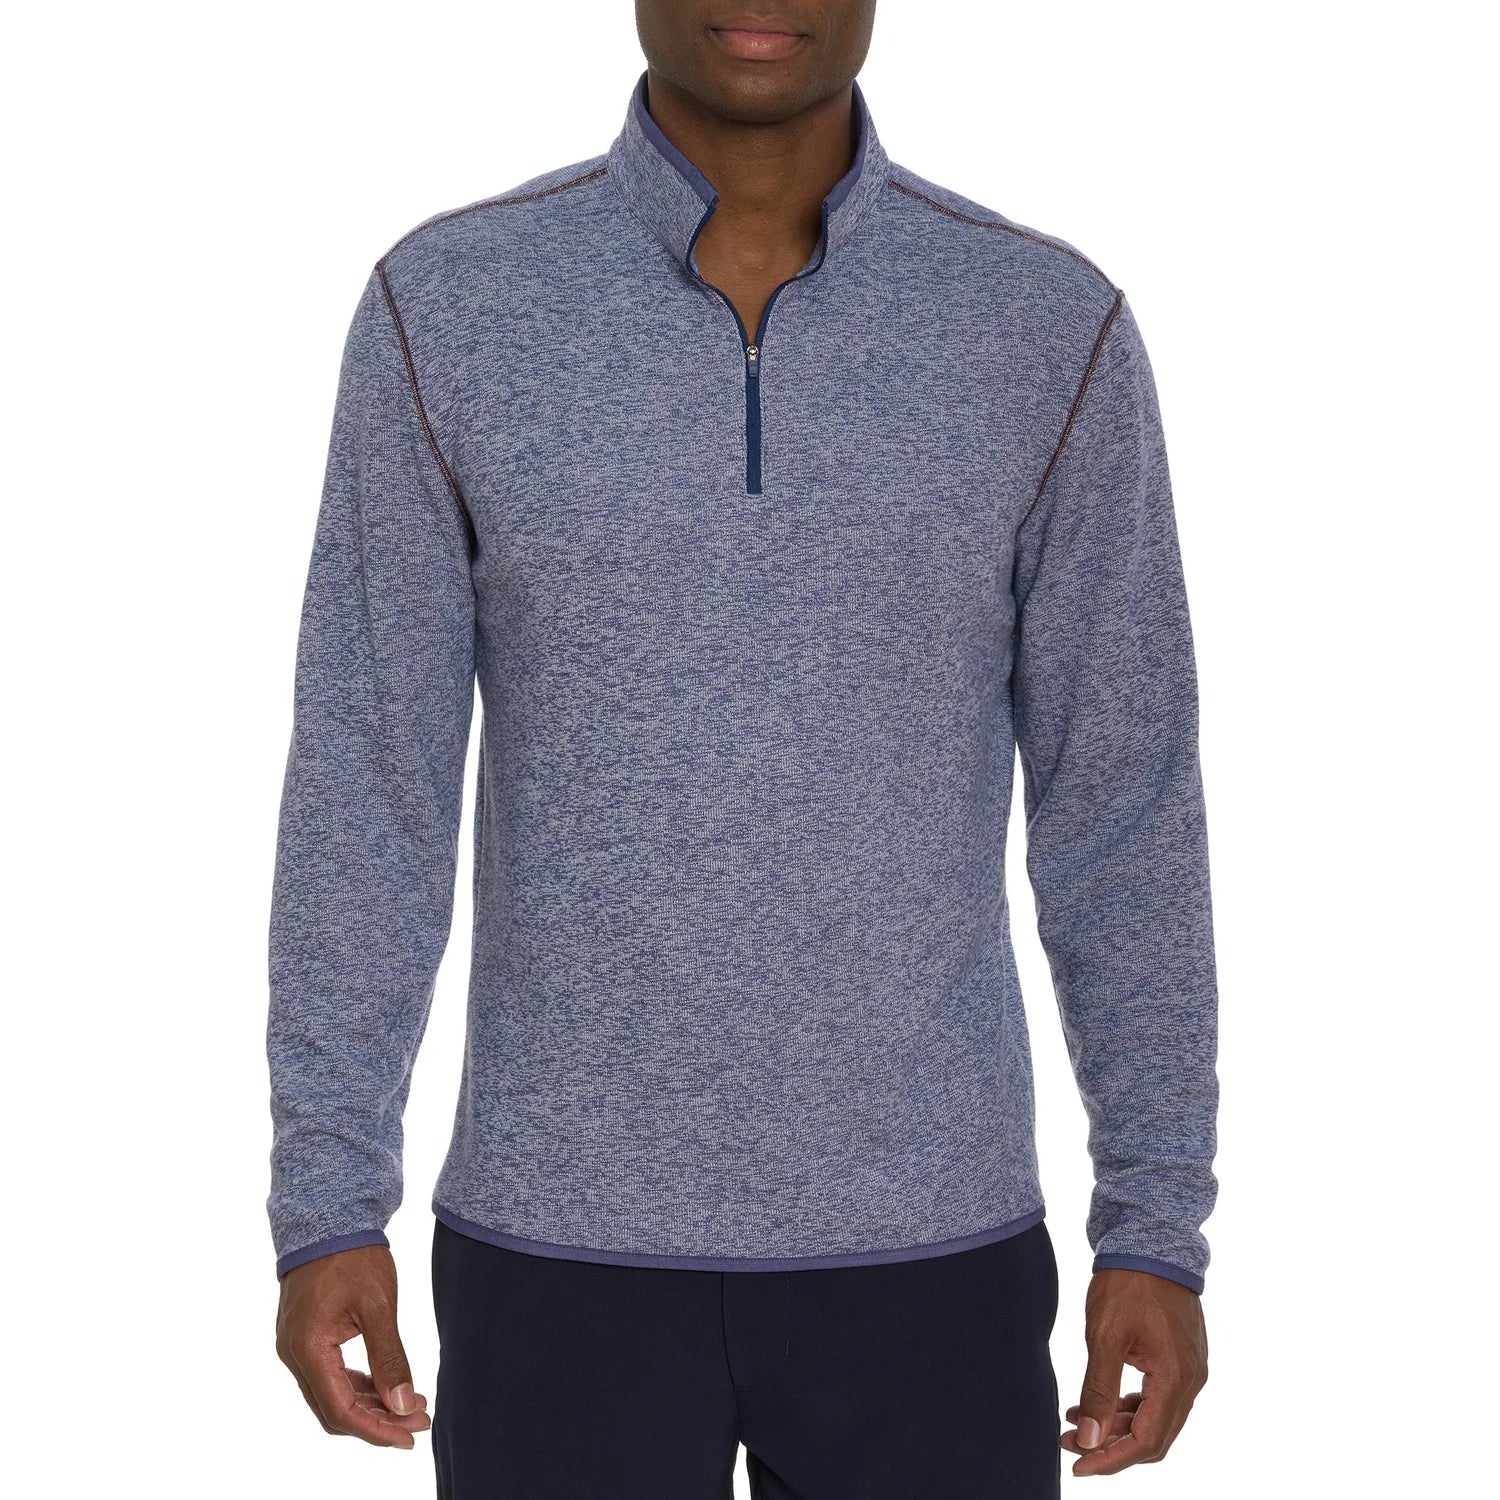 'Robert Graham Cariso Pullover 1/4 Zip Sweater' in 'Navy' colour